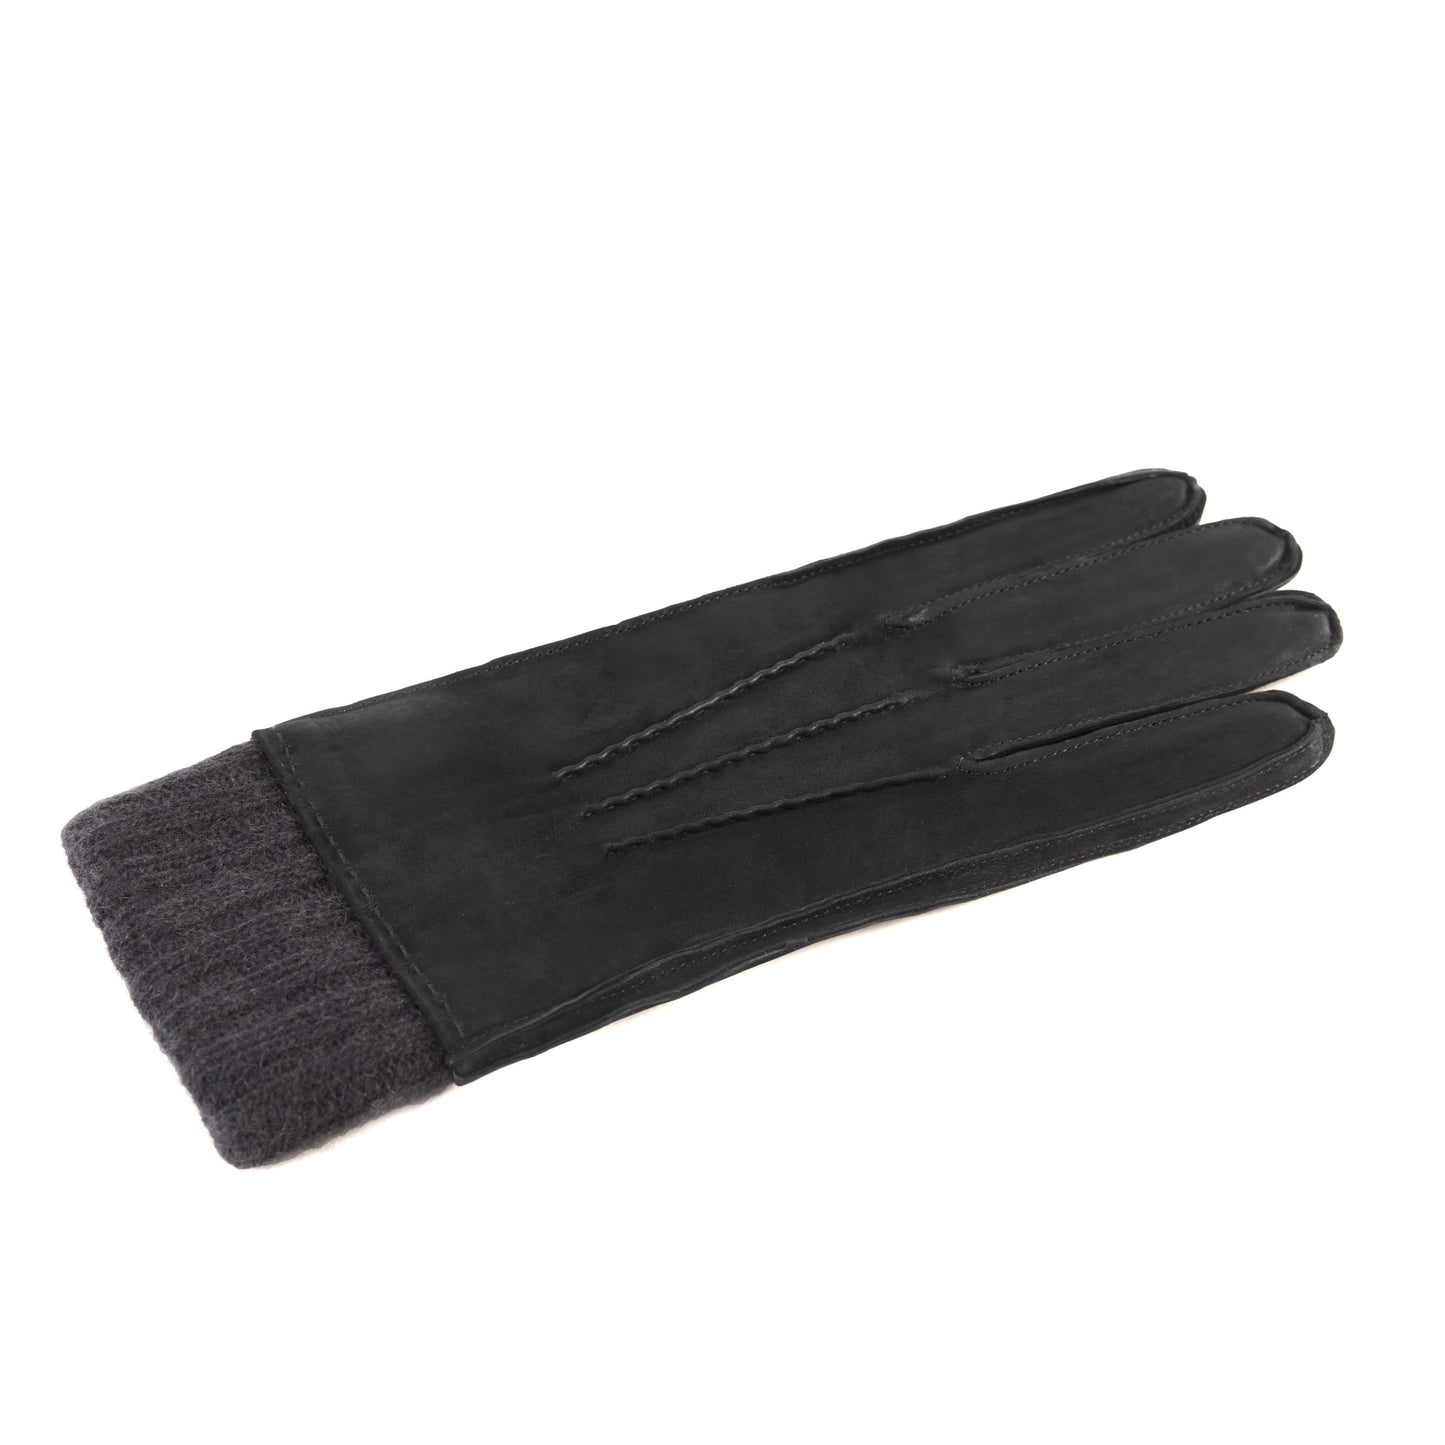 Men's black nubuk gloves with dark grey cashmere lining with cuff